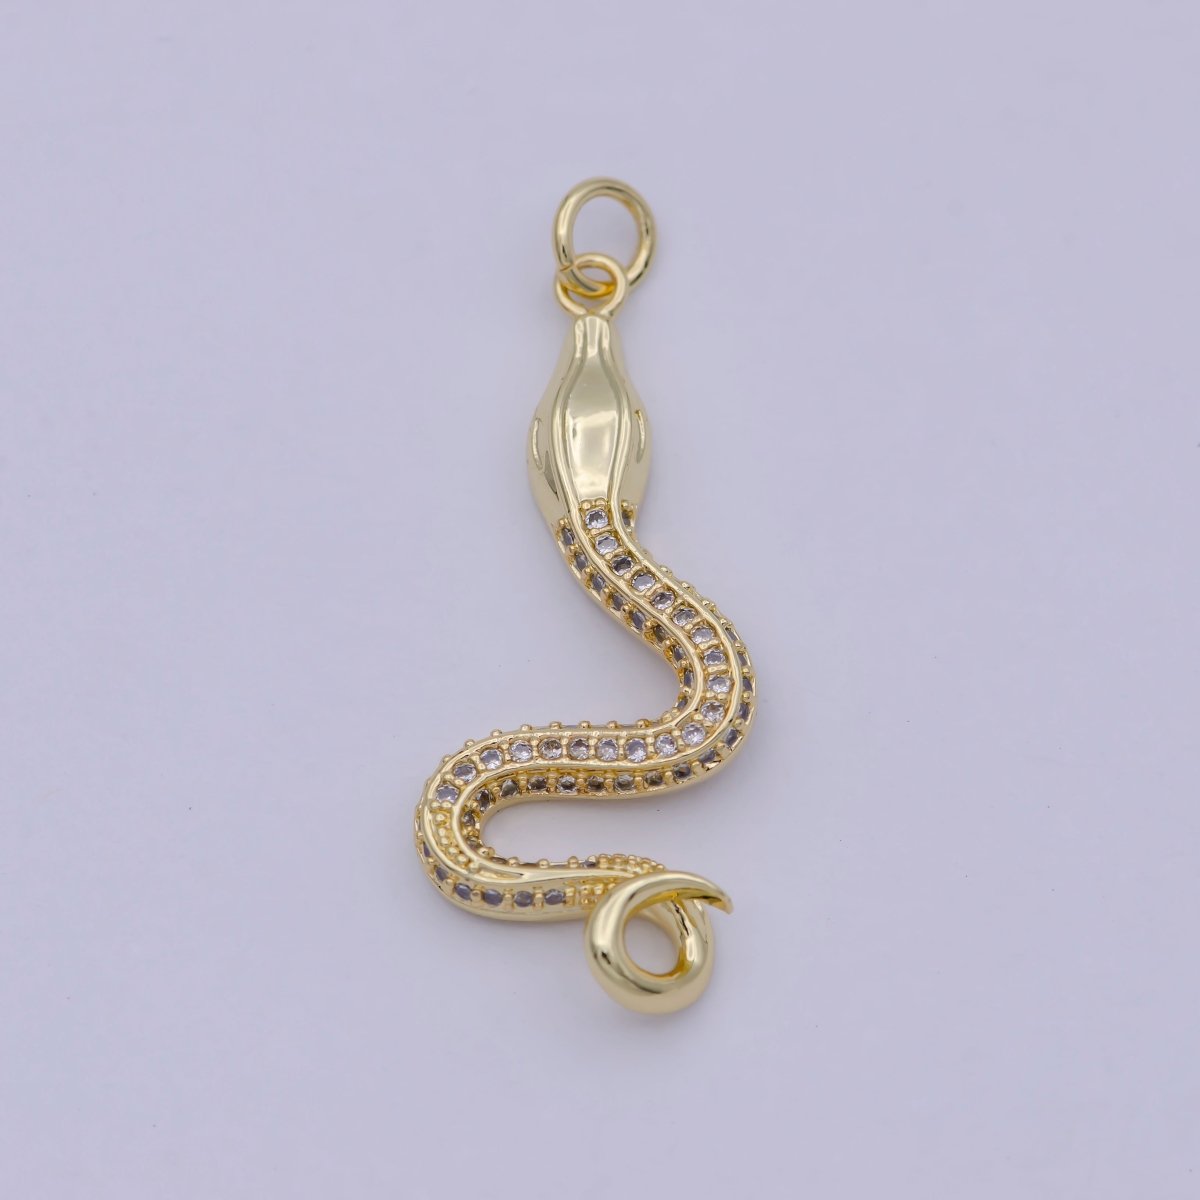 24K Gold Filled Snake Charms 3D Gold Snake Pendant -Micro Pave Snake Charms Cubic Snake Pendant for Necklace SupplyC-300 - DLUXCA